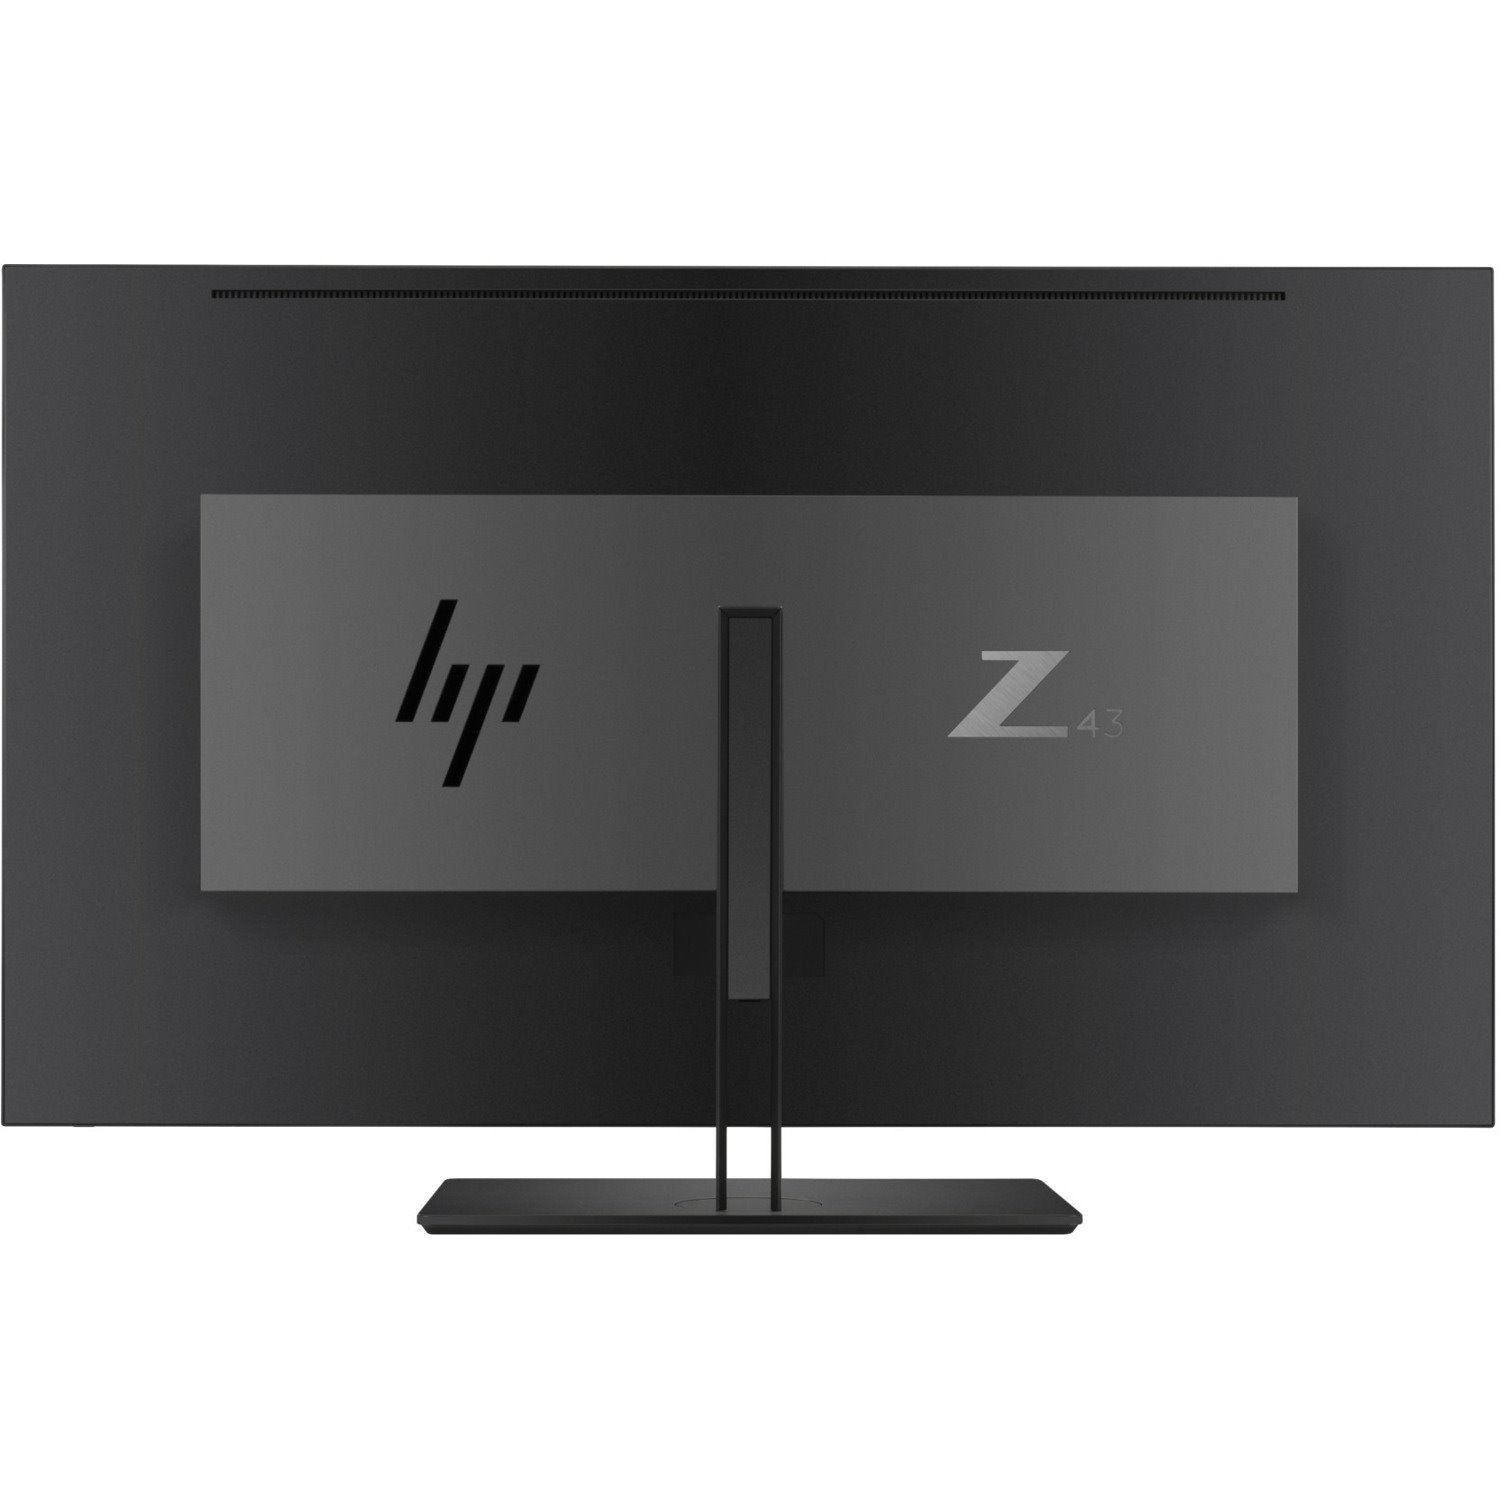 HP Business Z43 108 cm (42.5") 4K UHD LED LCD Monitor - 16:9 - Black